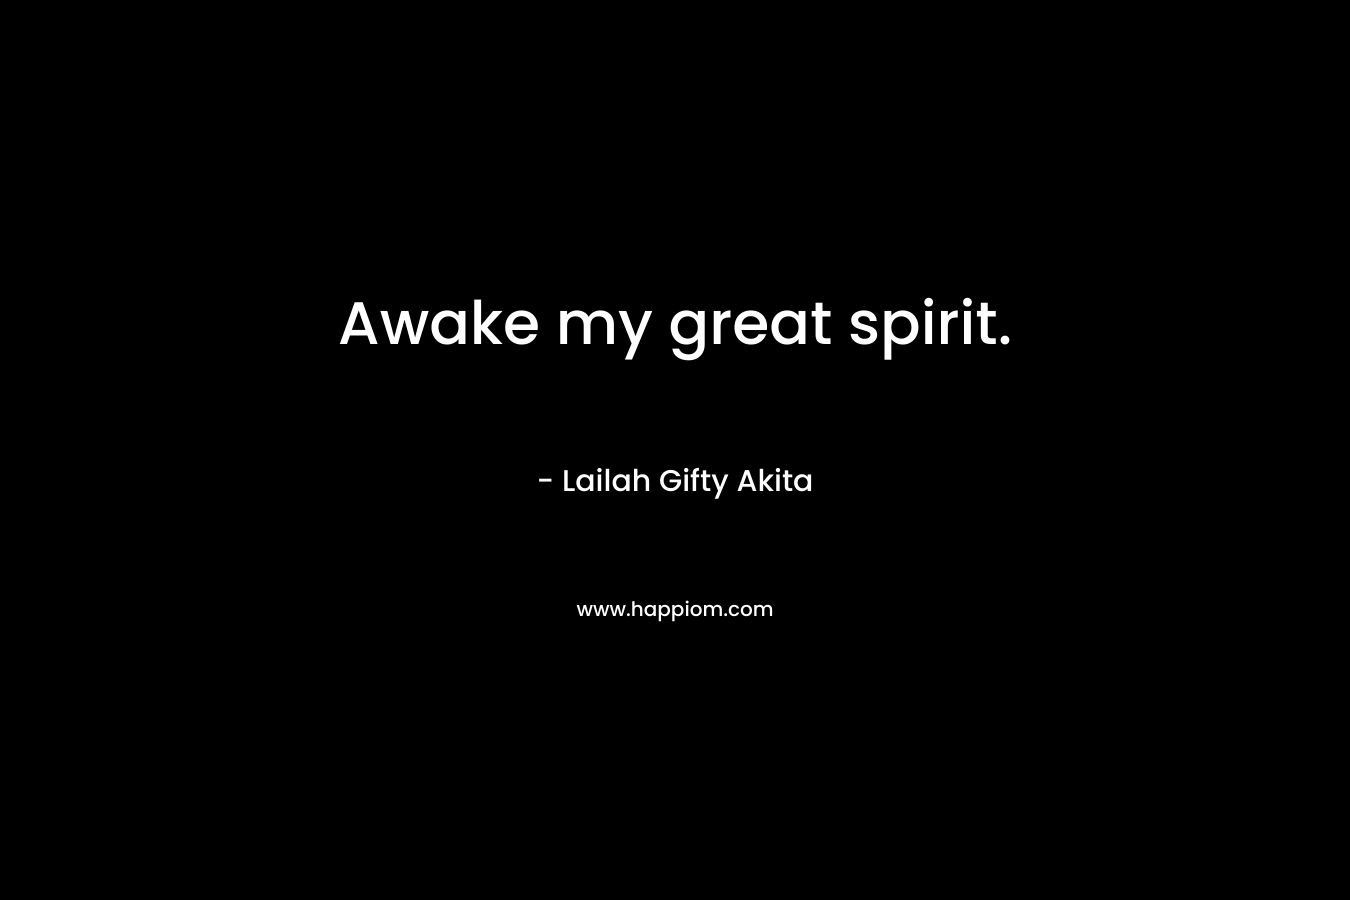 Awake my great spirit.